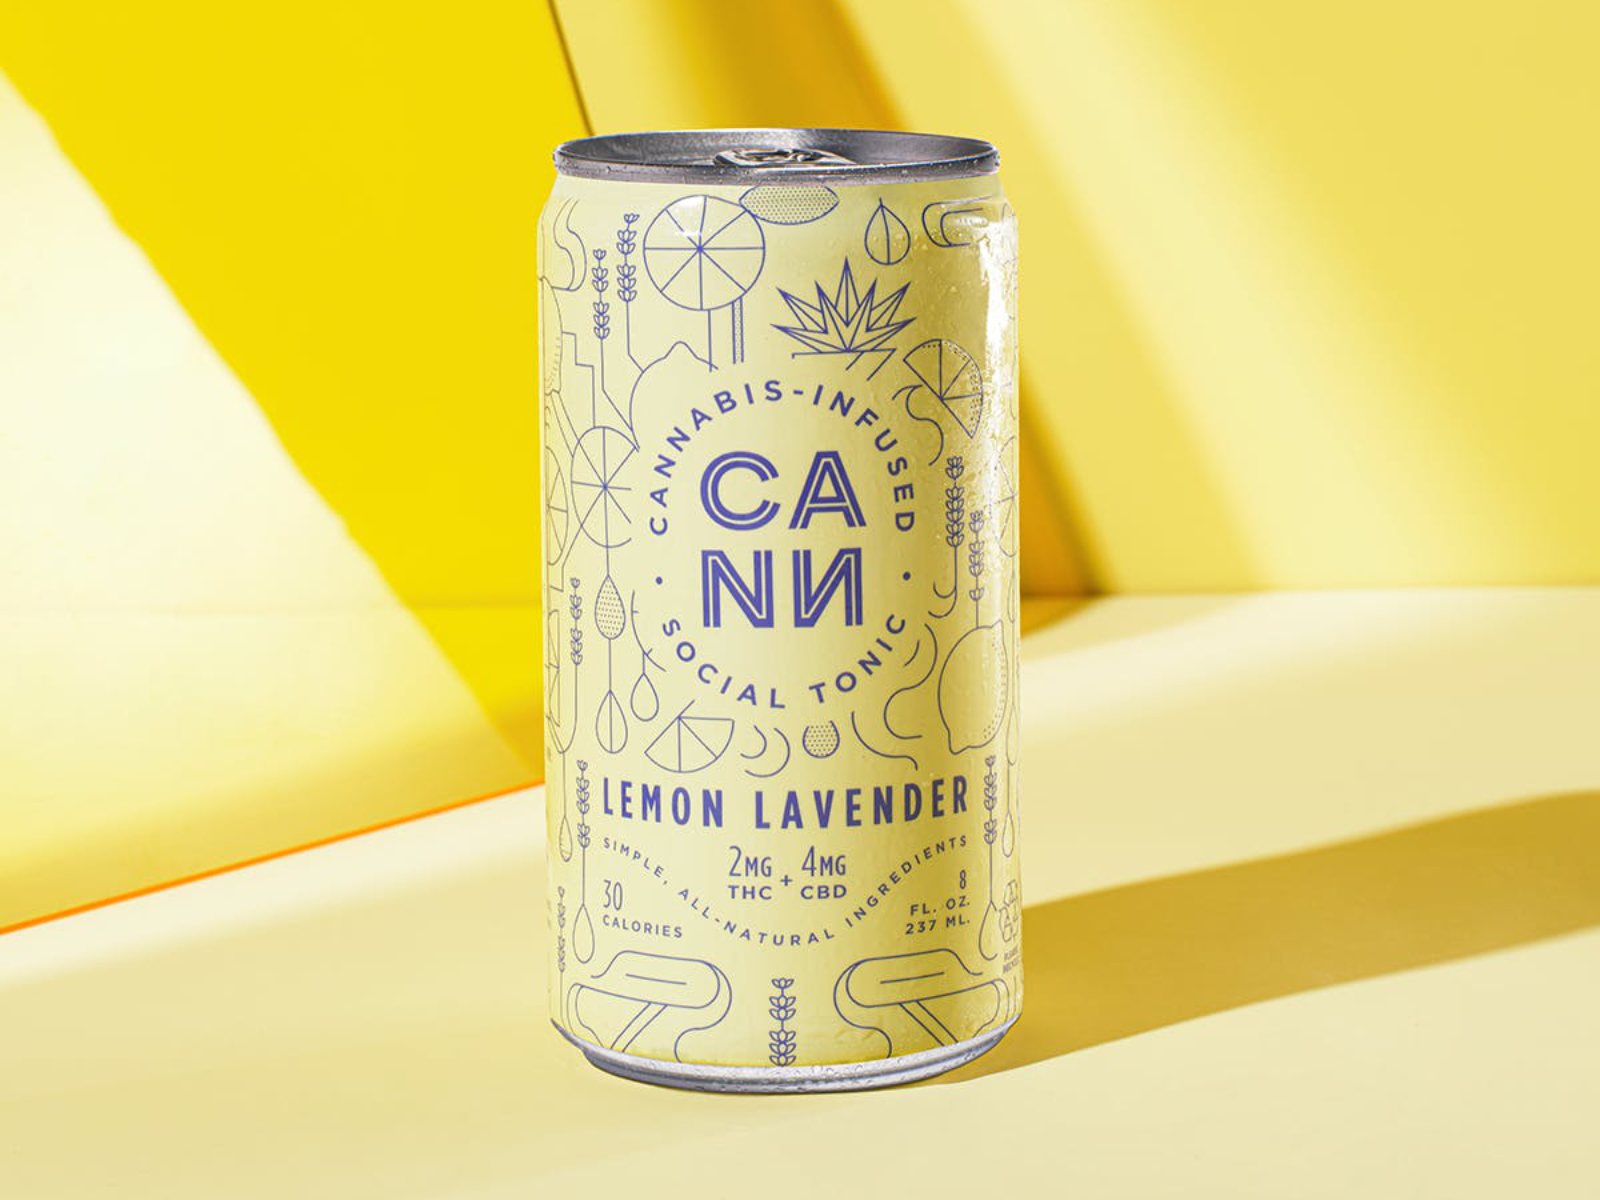 Cann cannabis drink can in lemon lavender flavor